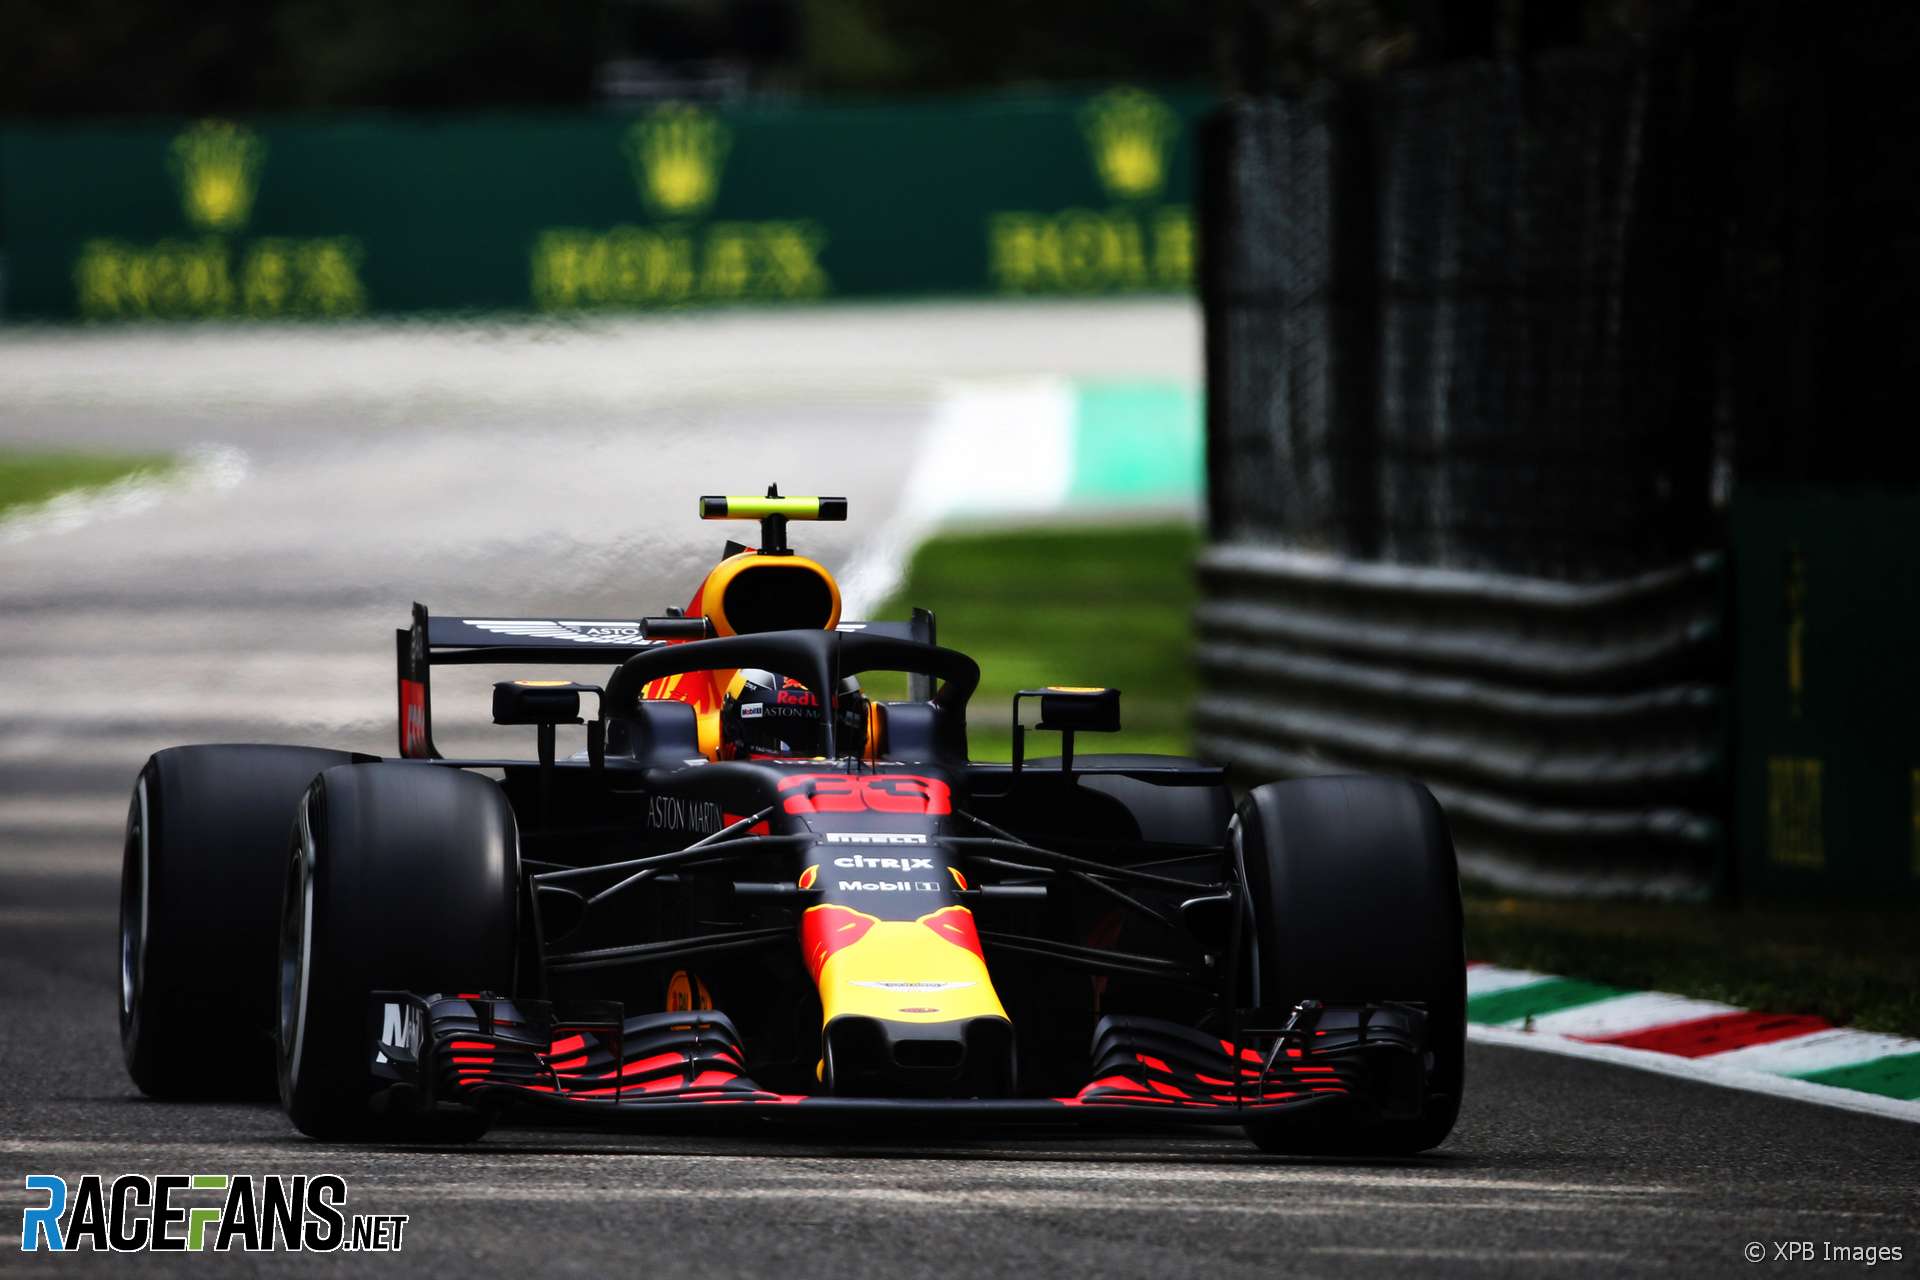 Max Verstappen, Red Bull, Monza, 2018